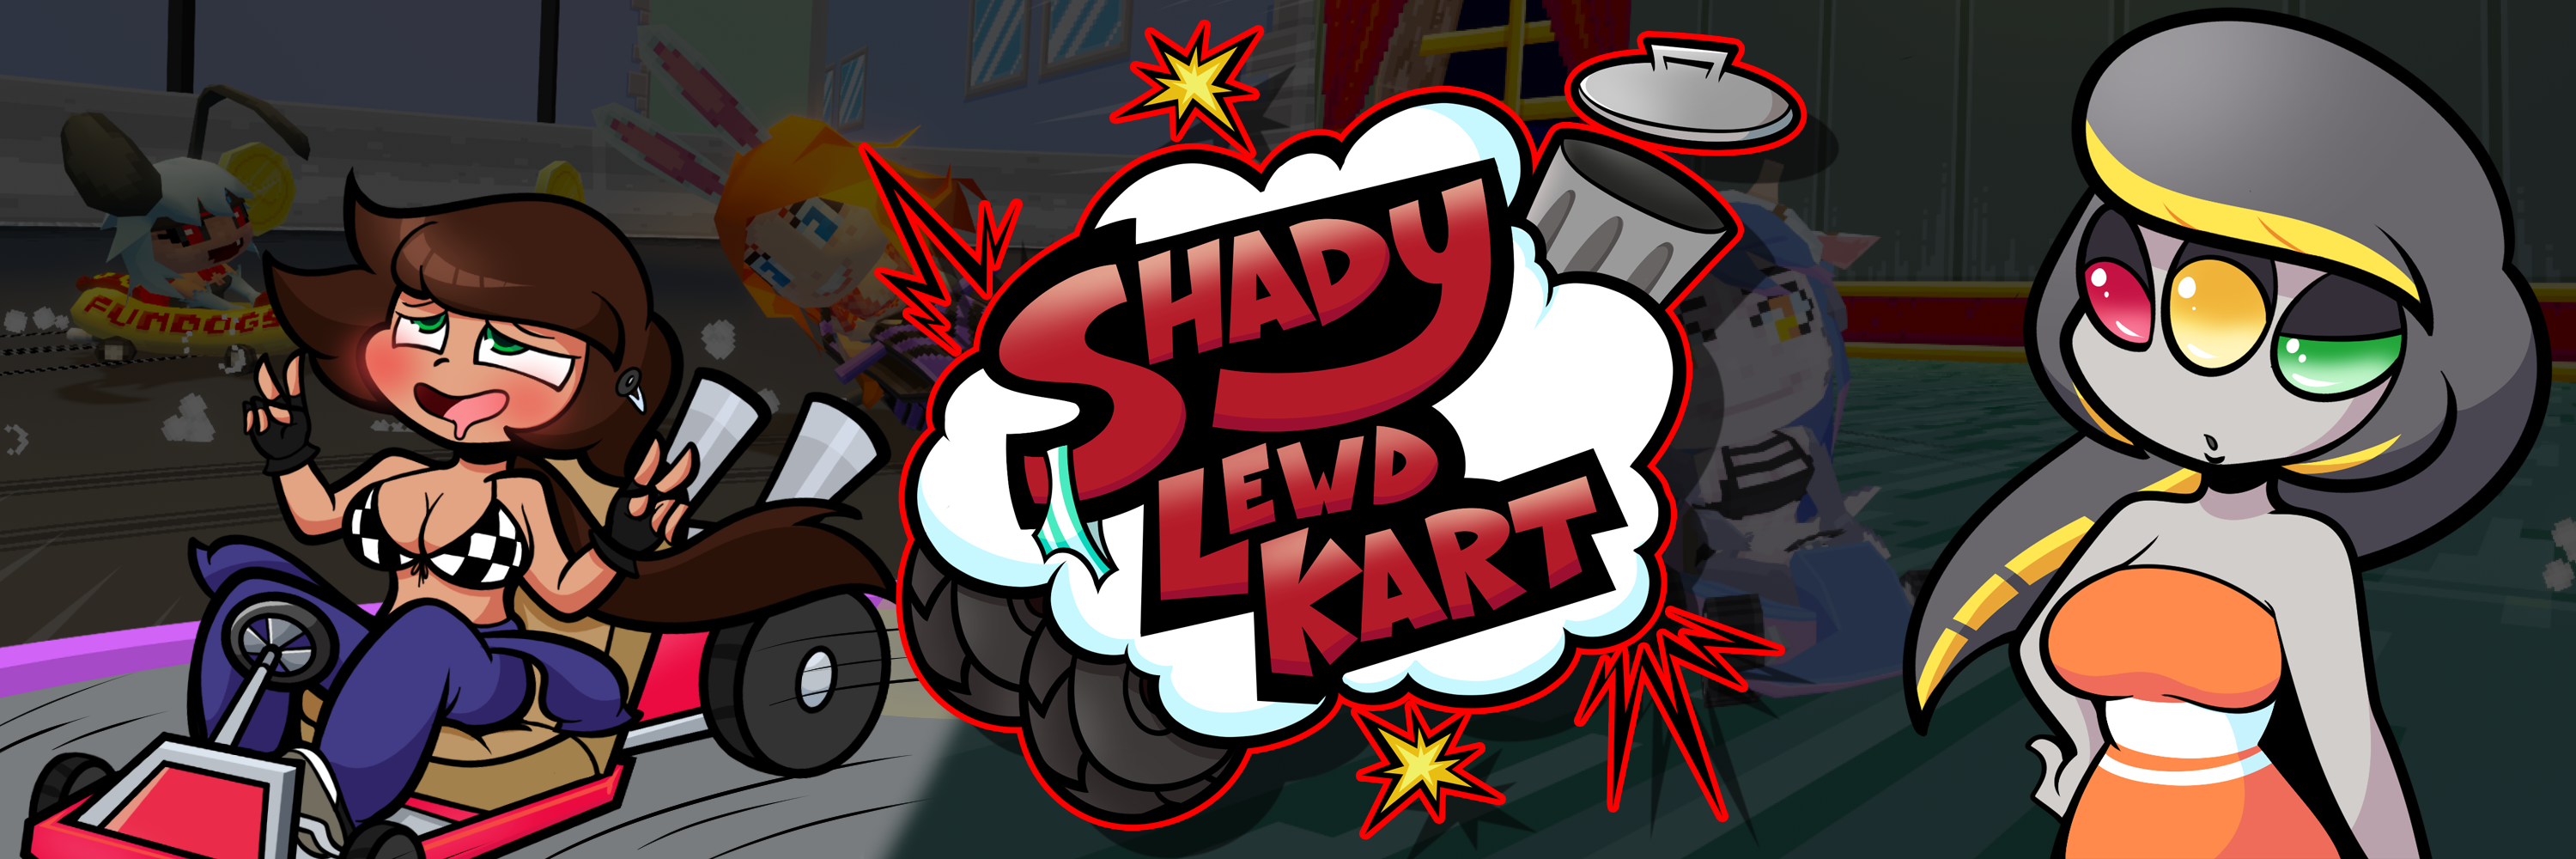 Shady Lewd Kart (Early Access)